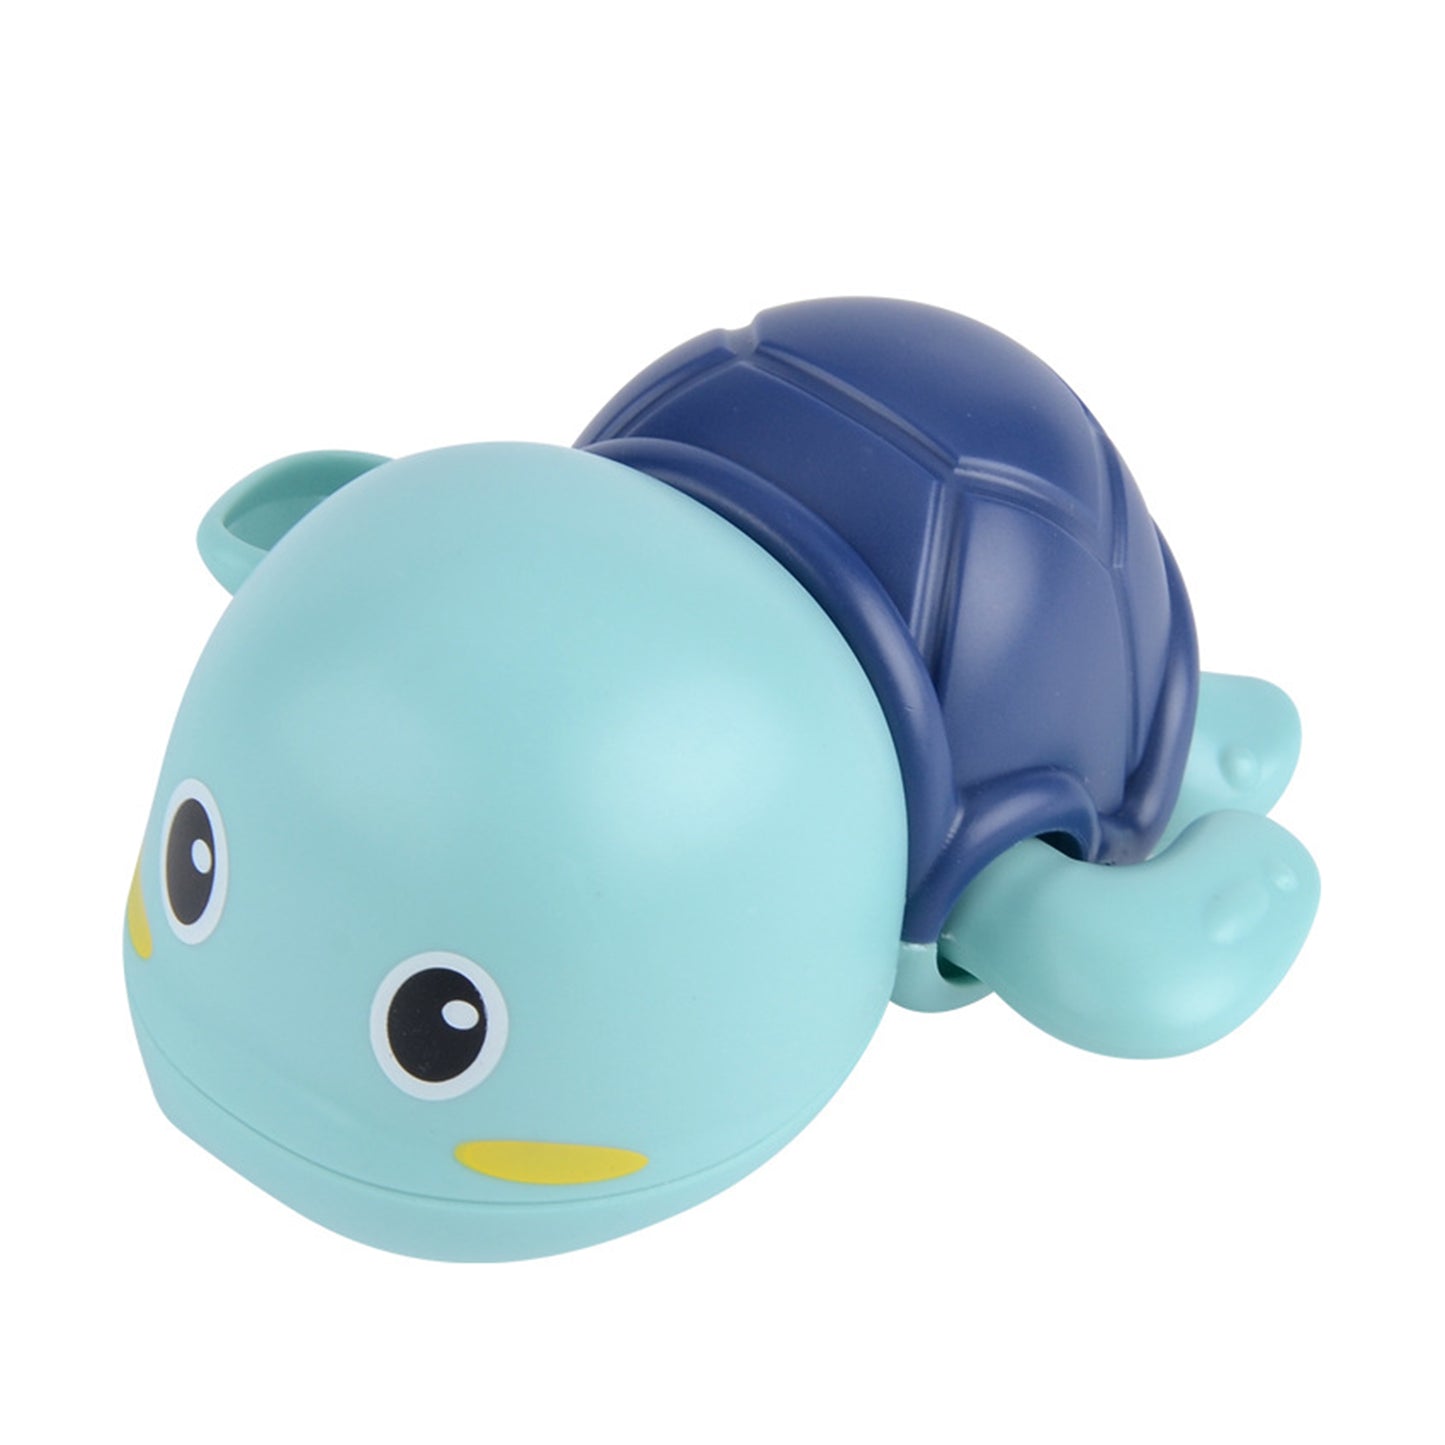 Cute Swimming Turtle Bath Toys For Kids,  Baby Bath Toy , Baby Bathtub Water Toys